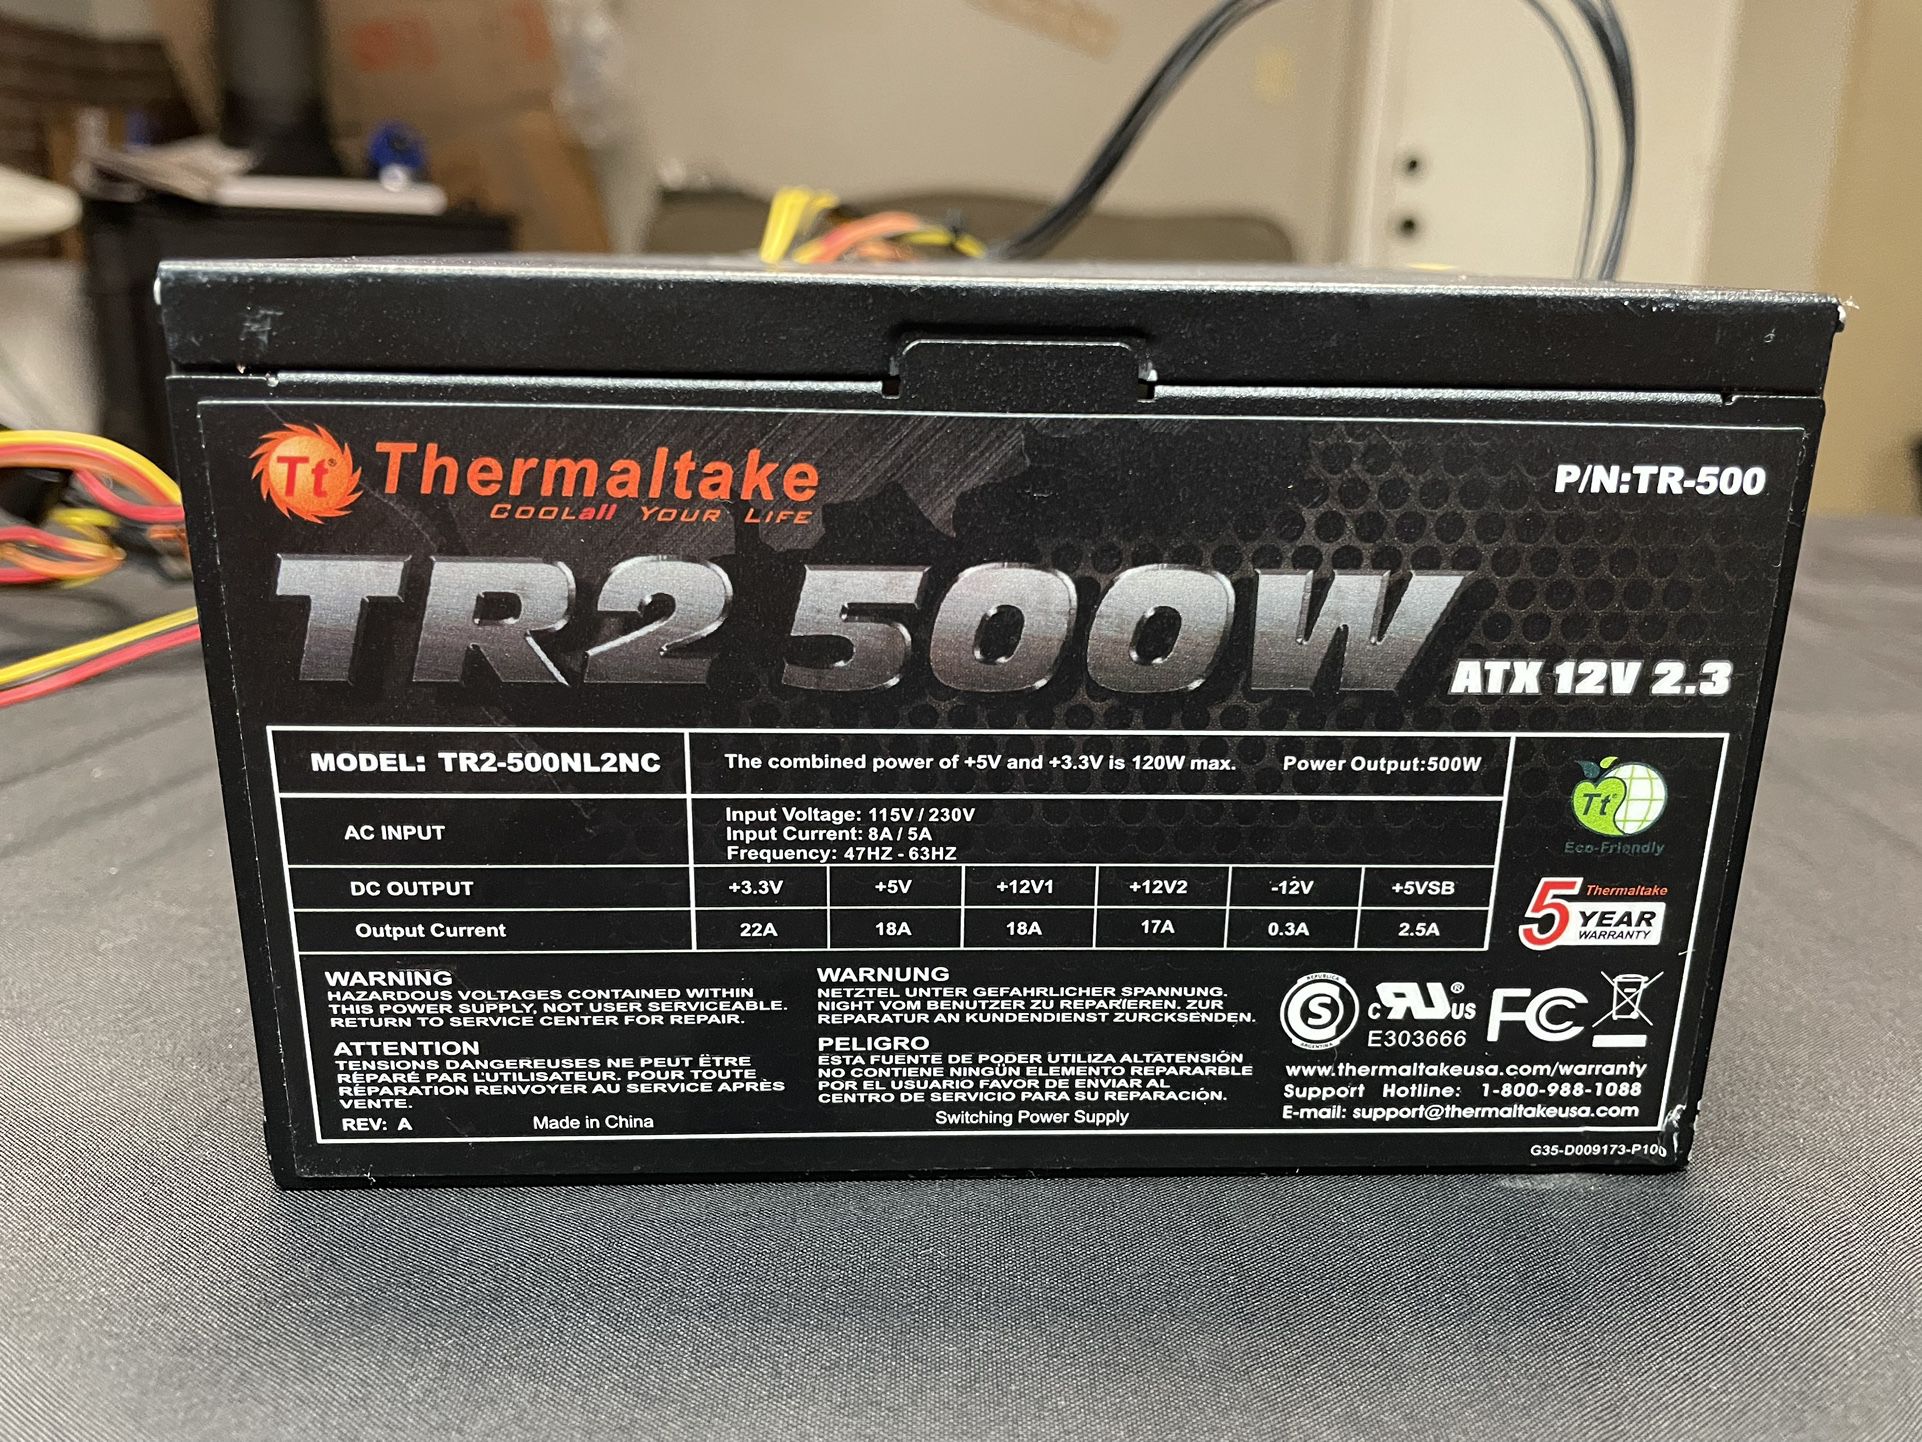 gaming power supply Thermaltake Tech TR2 500W Power Supply TR2-500NL2NC